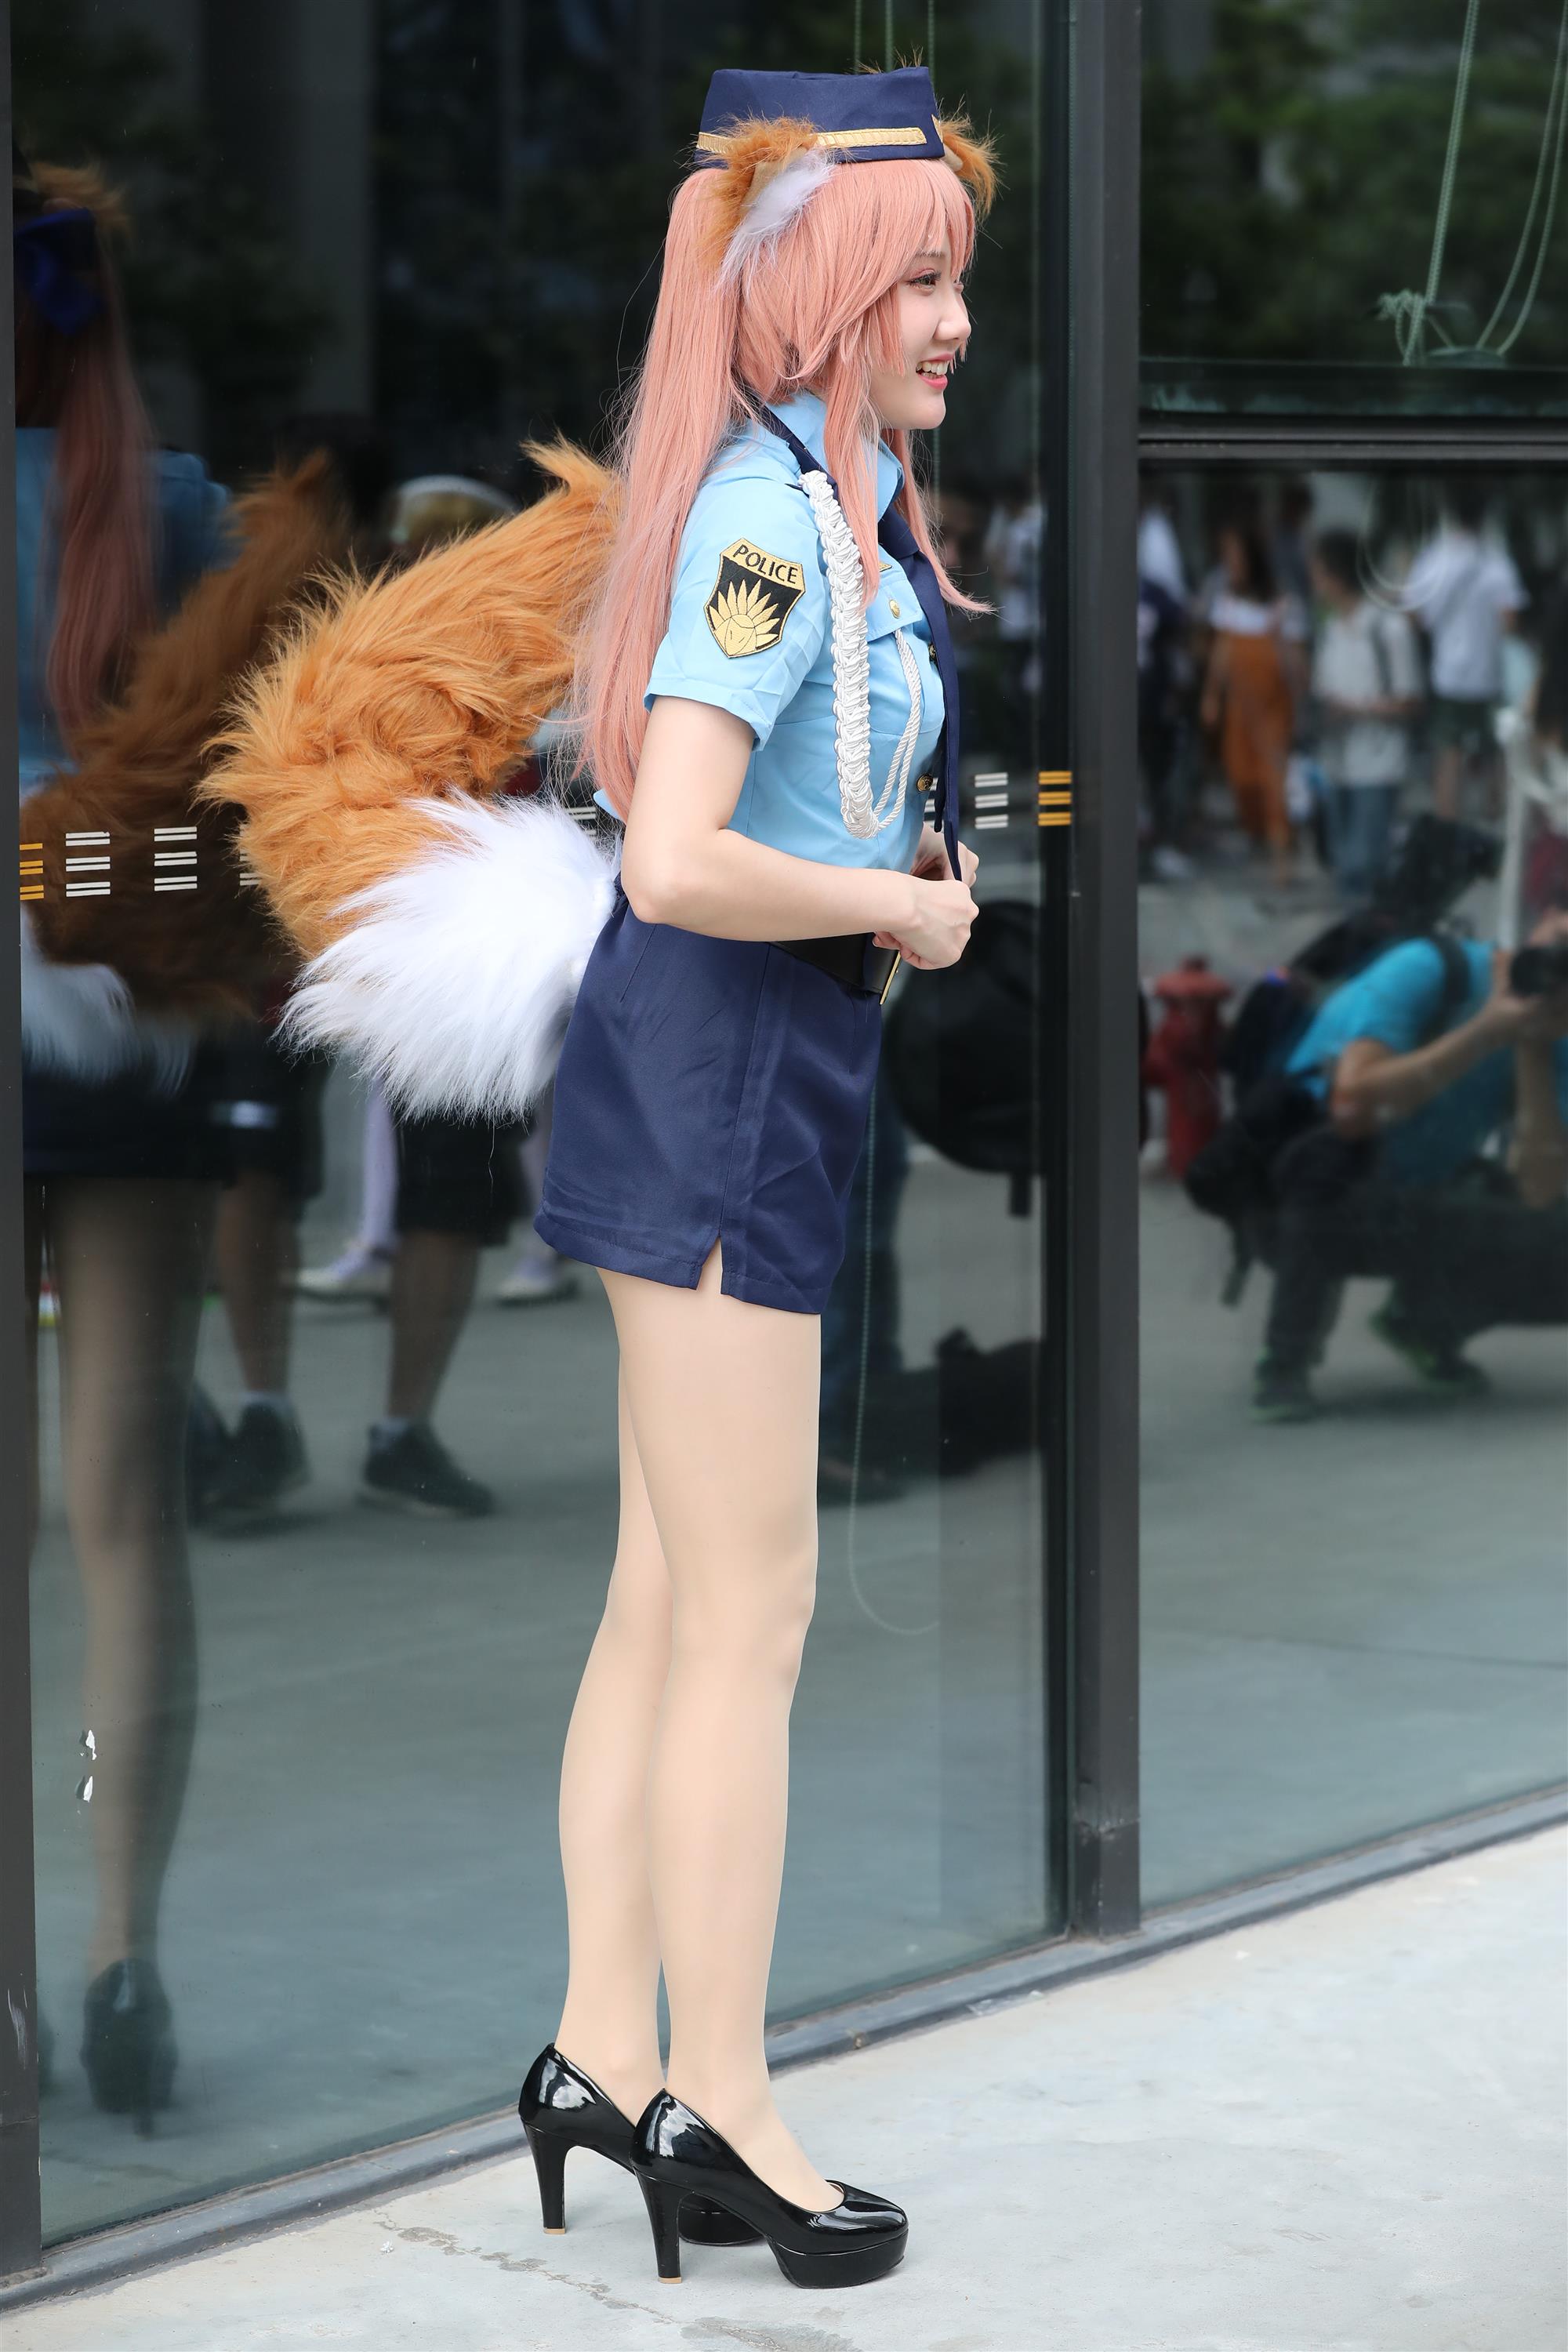 Street cosplay girl - 53.jpg